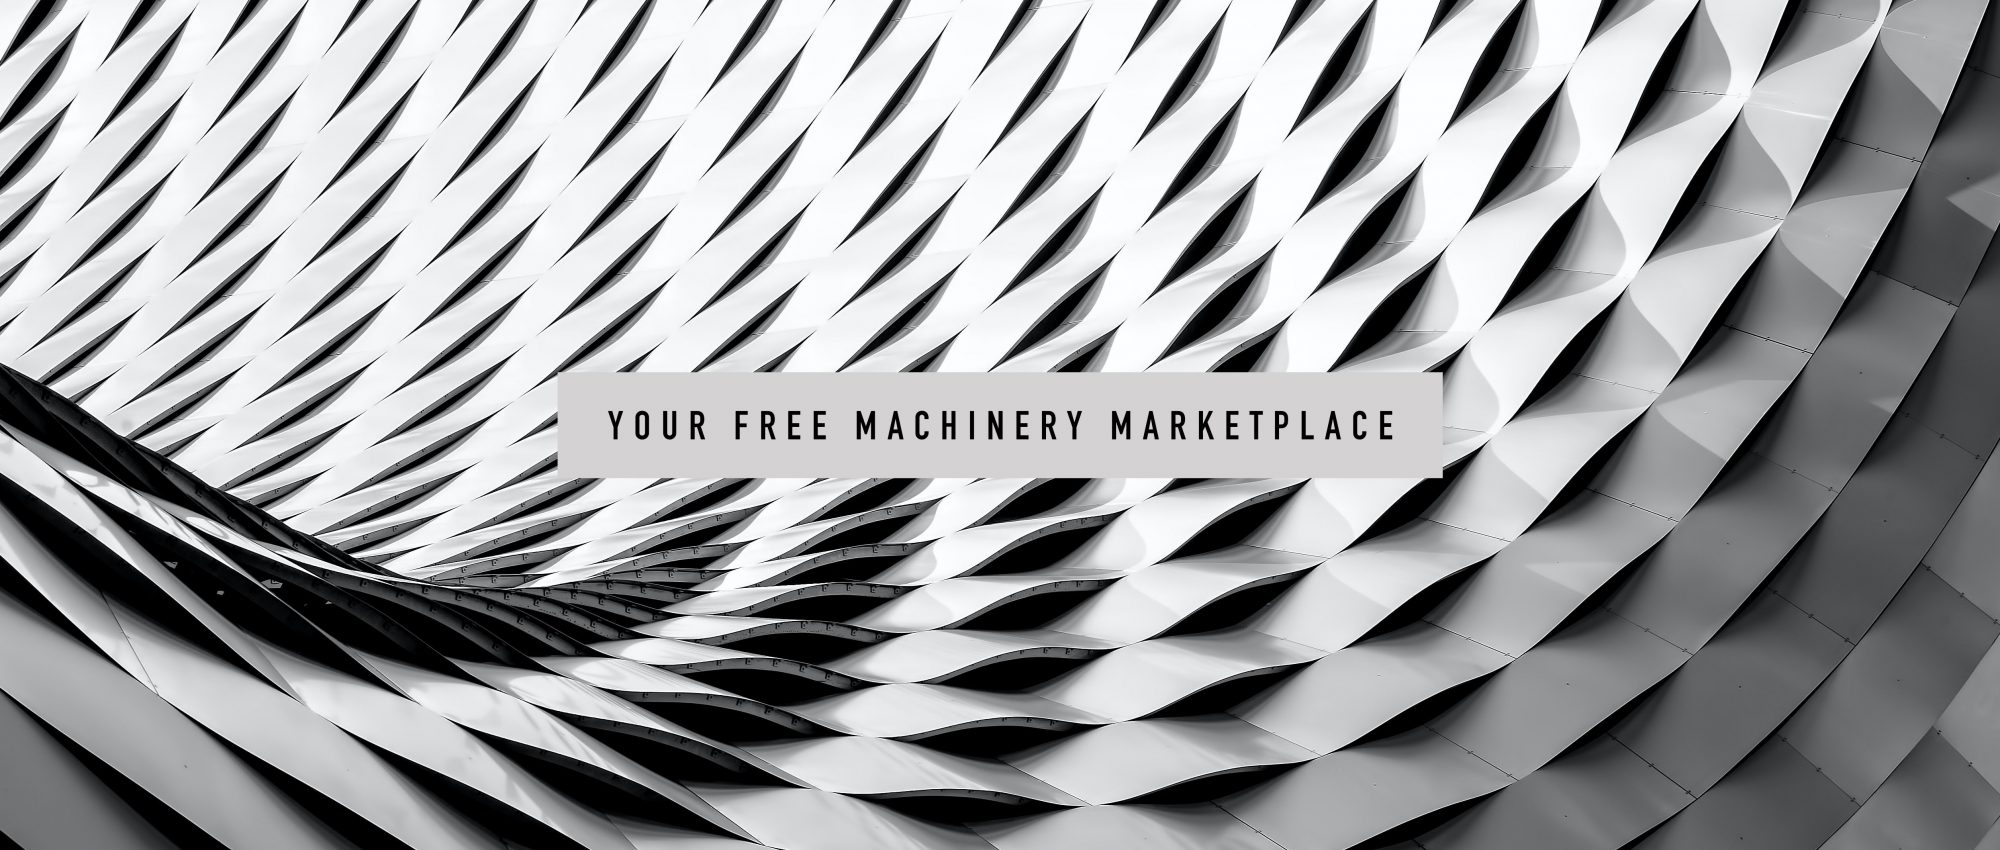 Machtrack-Machinery-Marketplace